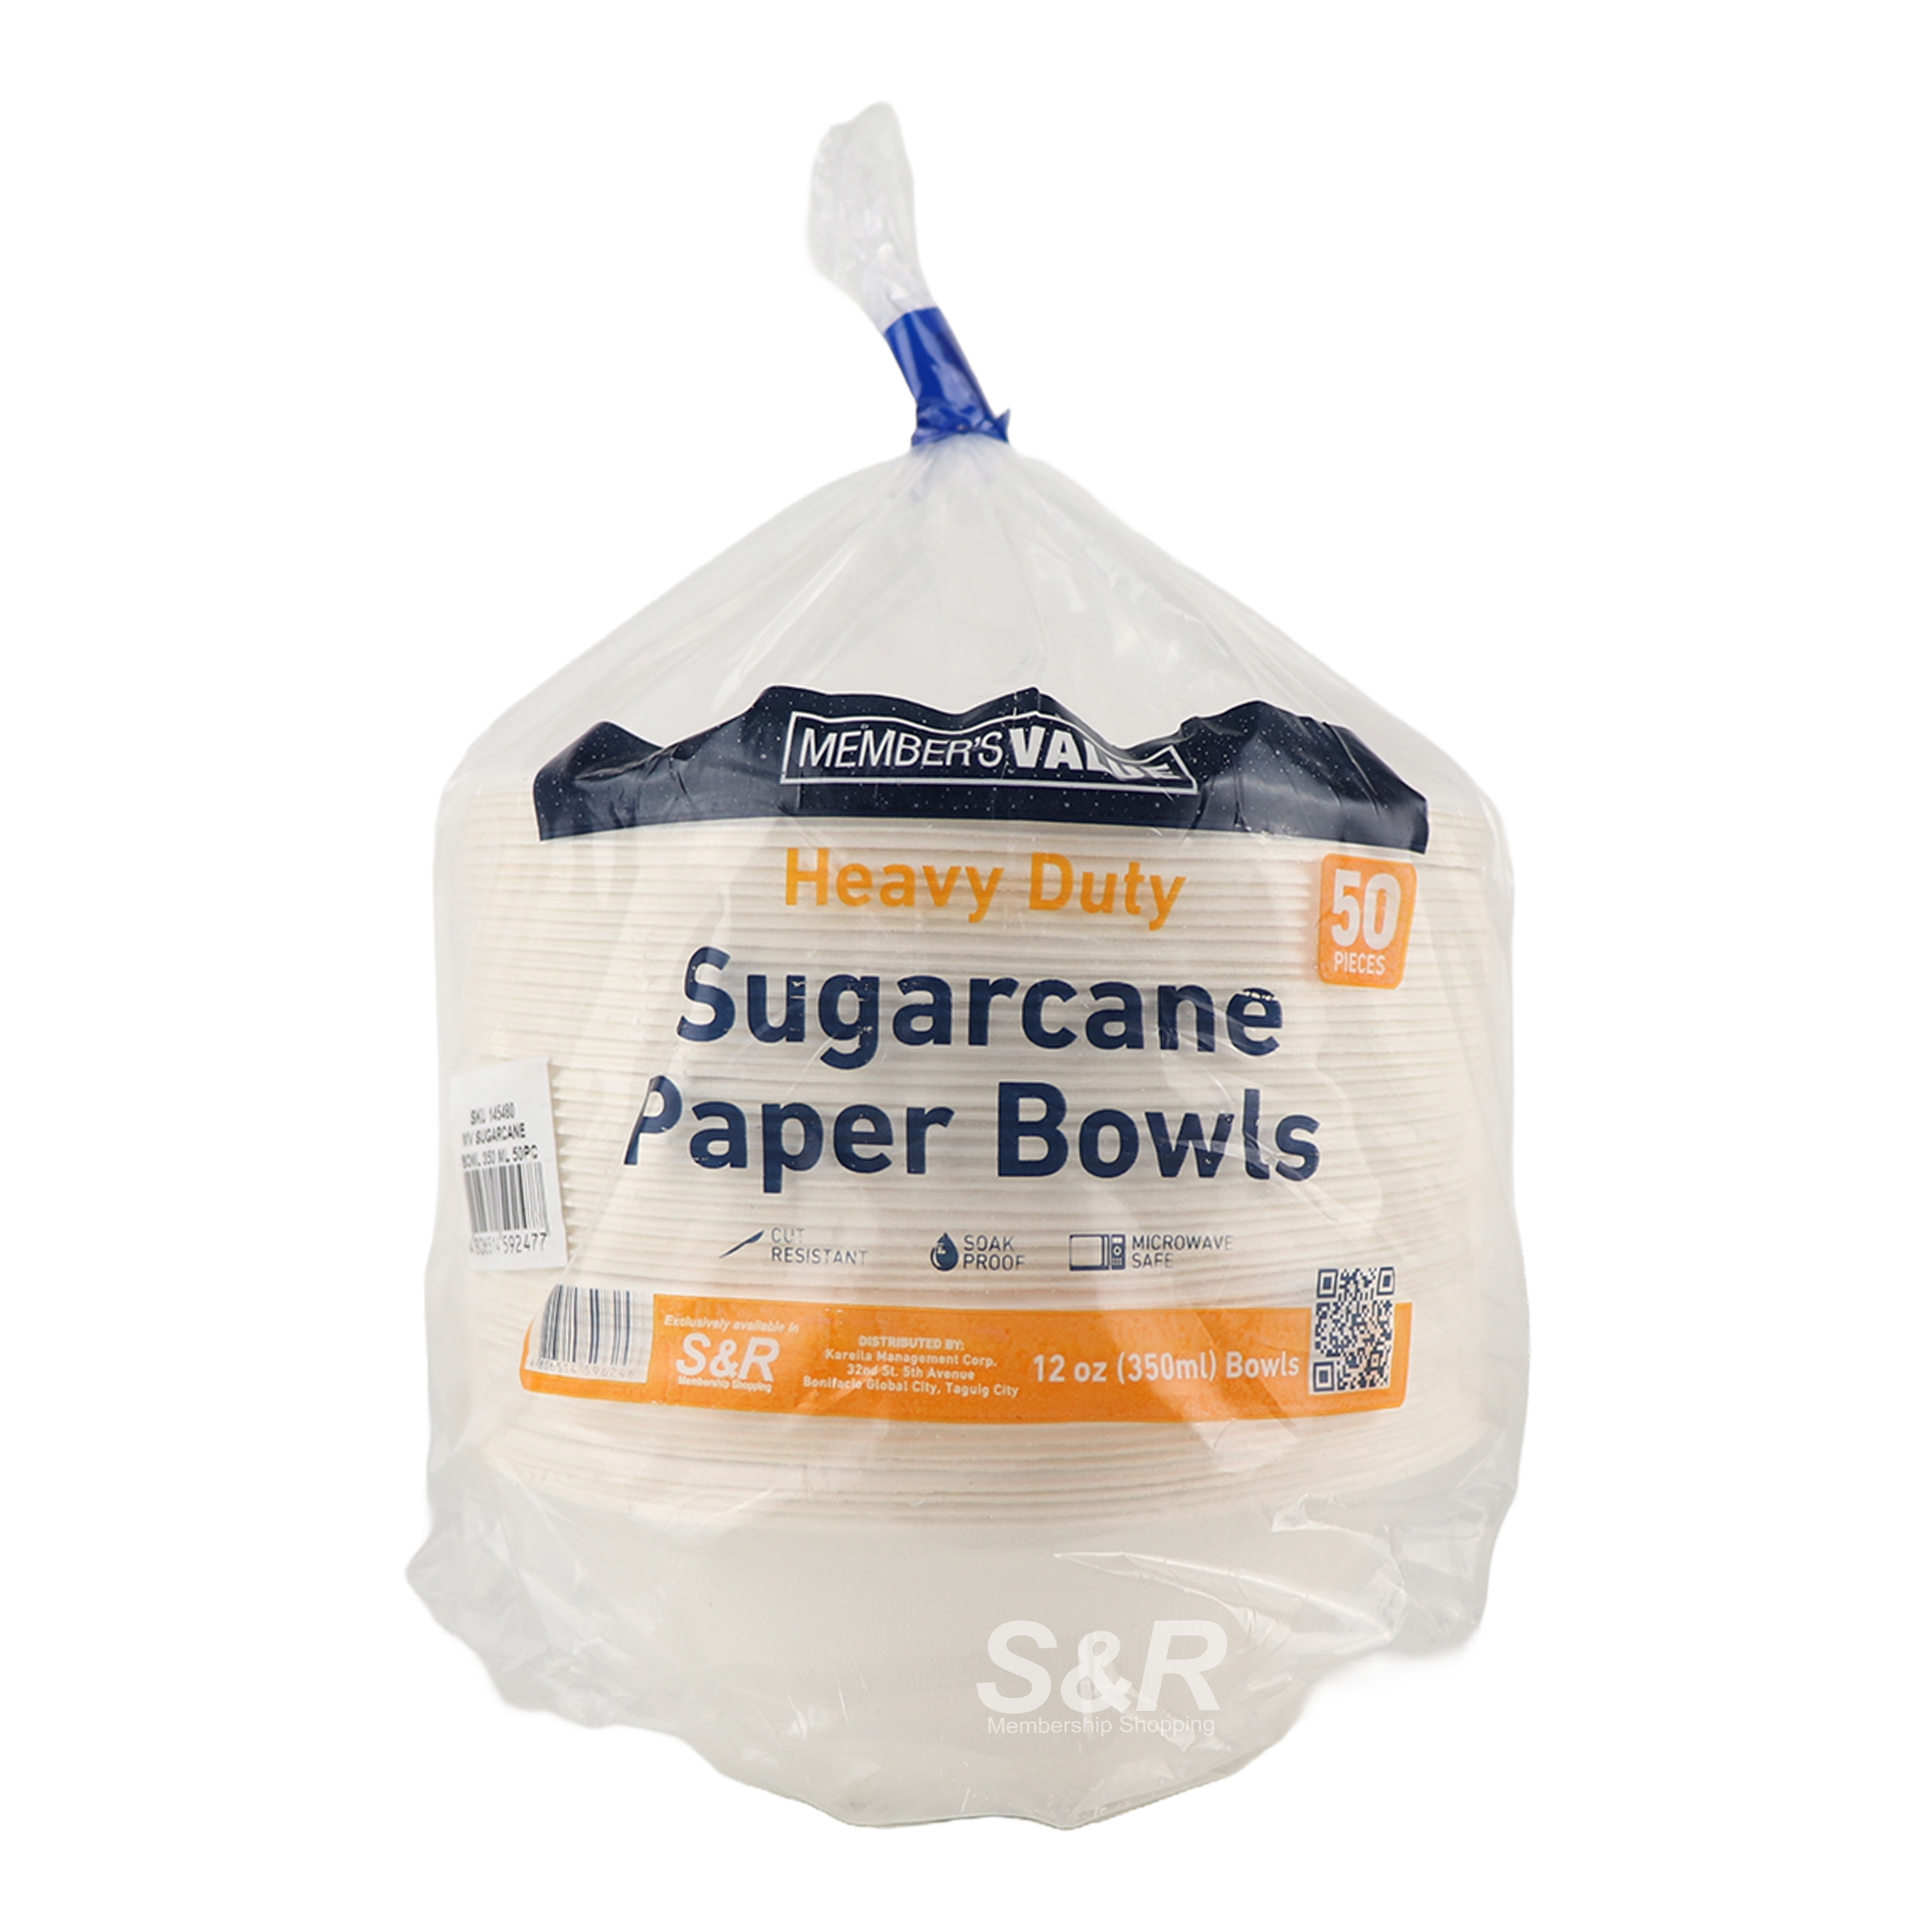 Member's Value Sugarcane Paper Bowls 50x350mL